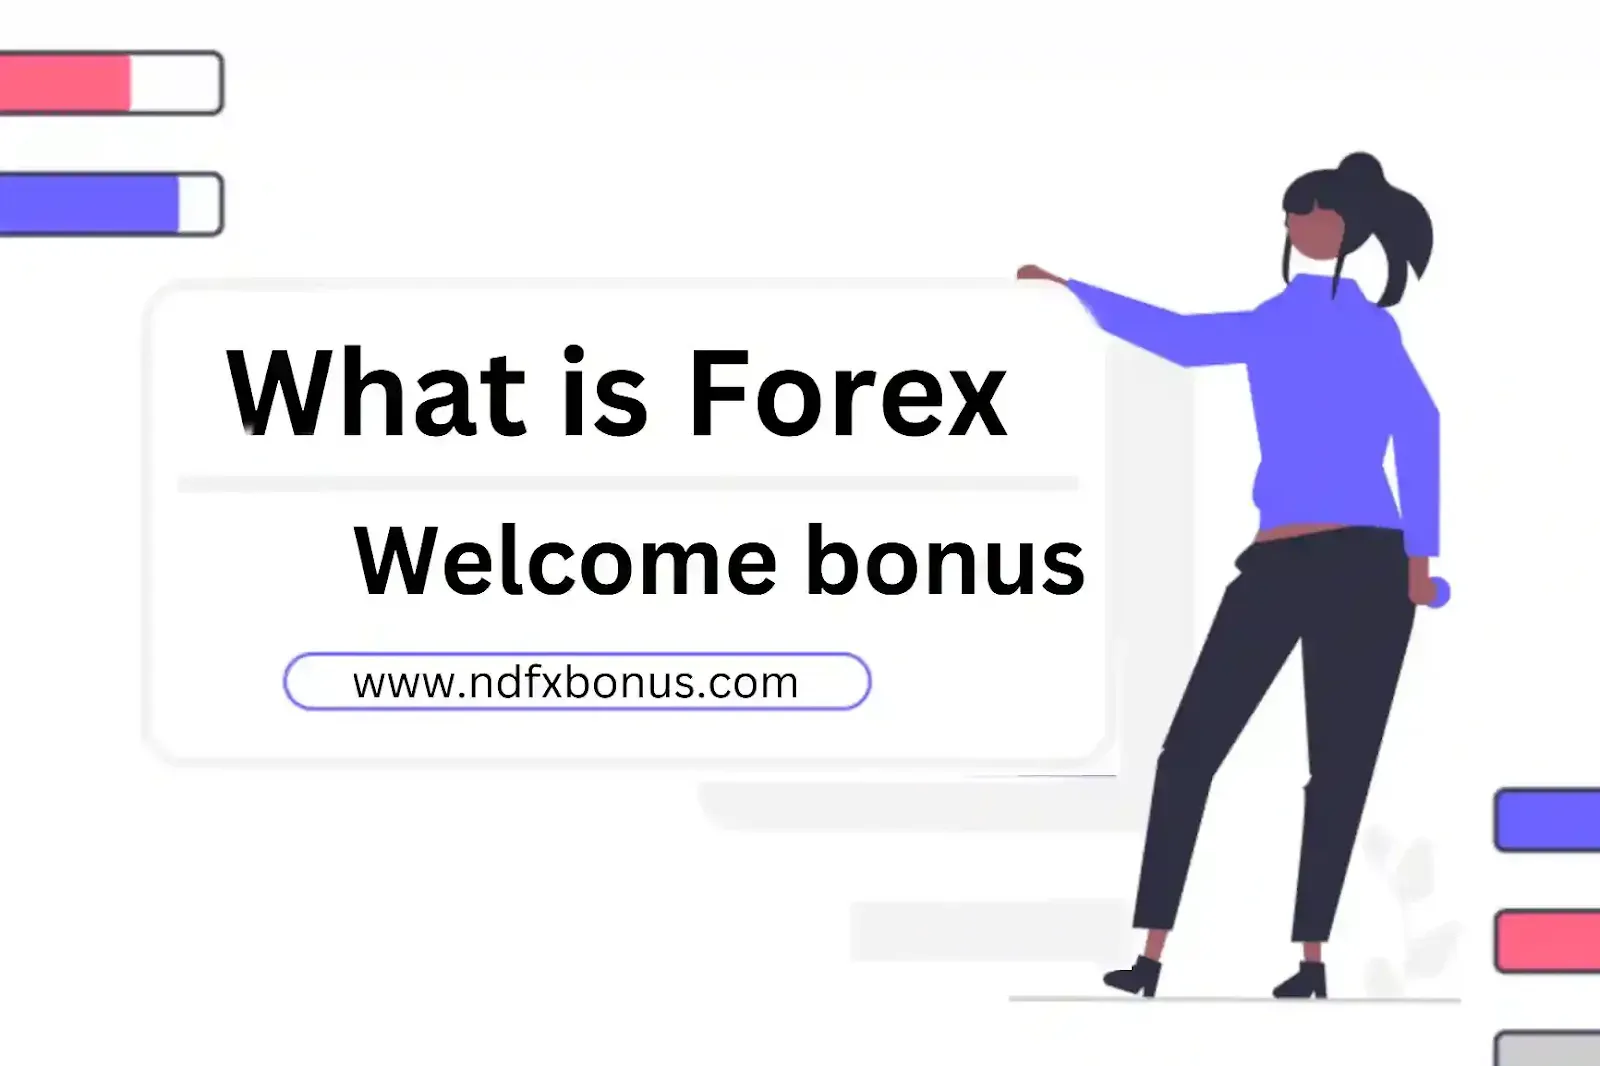 Forex welcome bonus